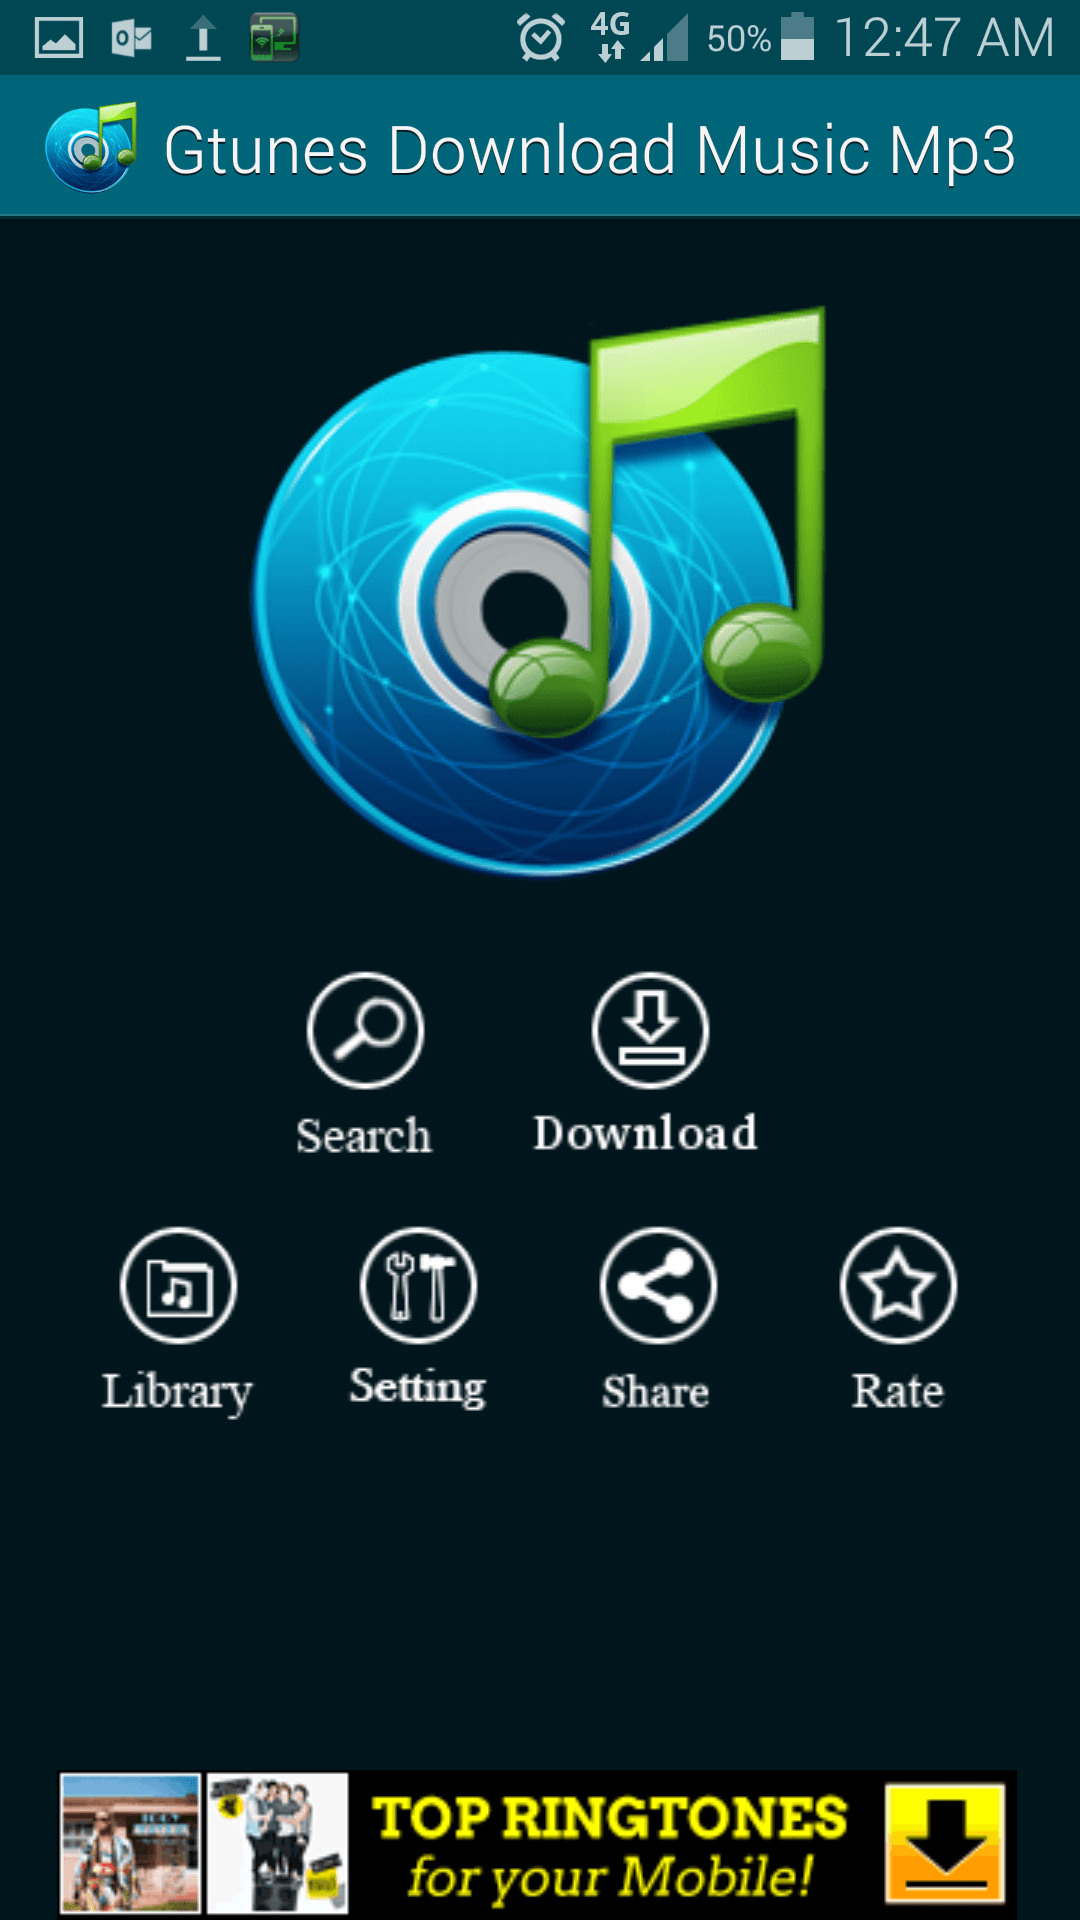 music app download